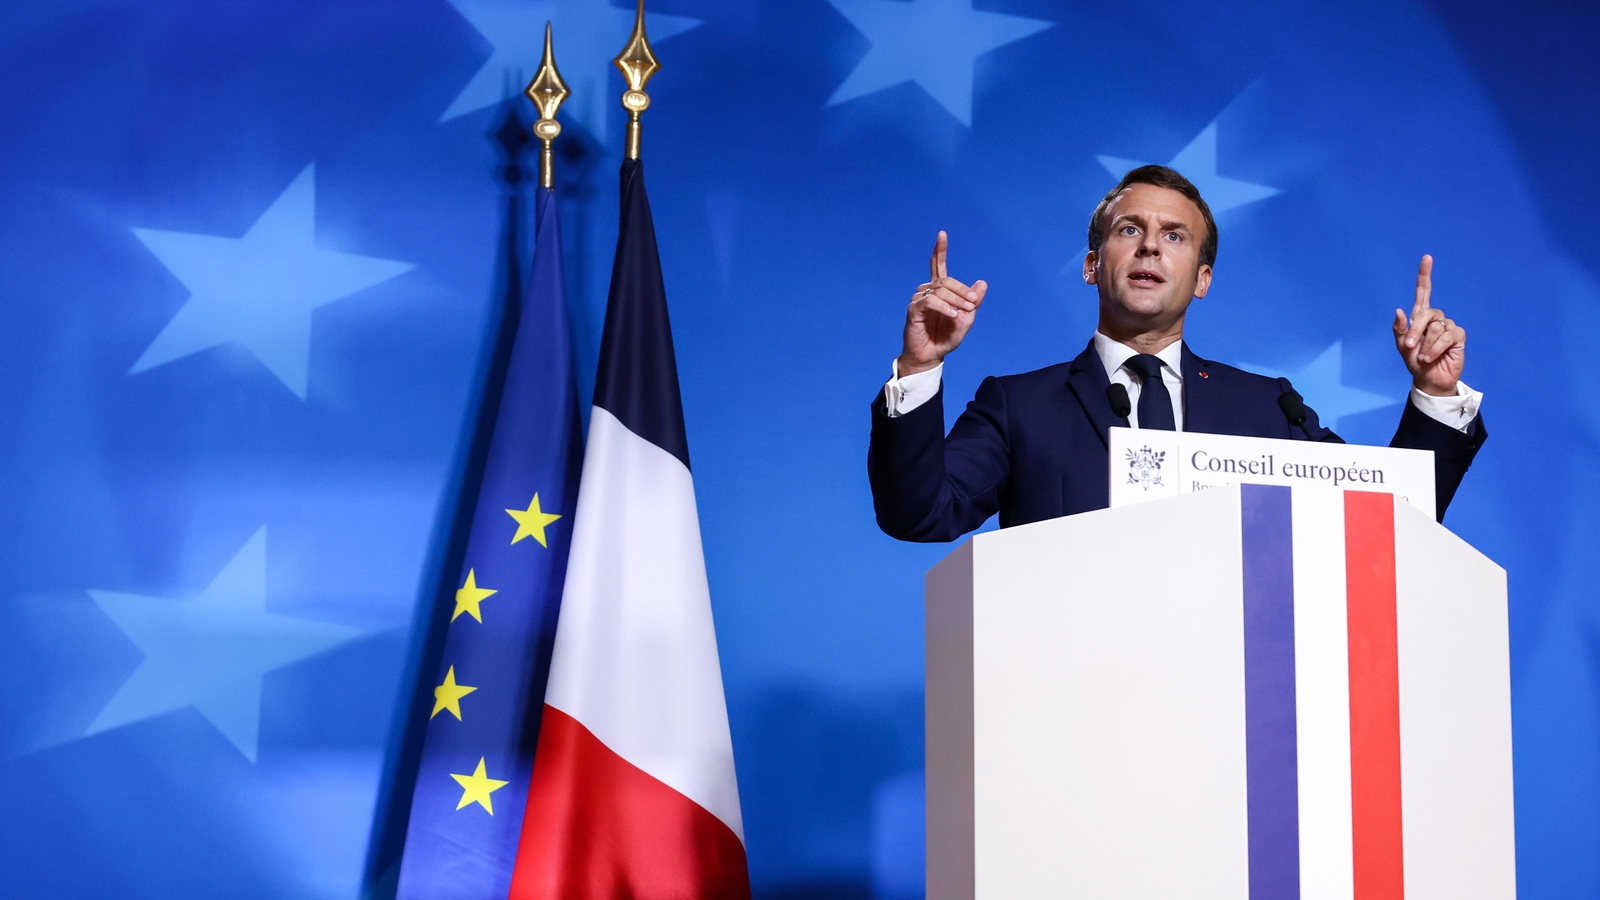 Two shades of blue: Macron makes (subtle) flag change